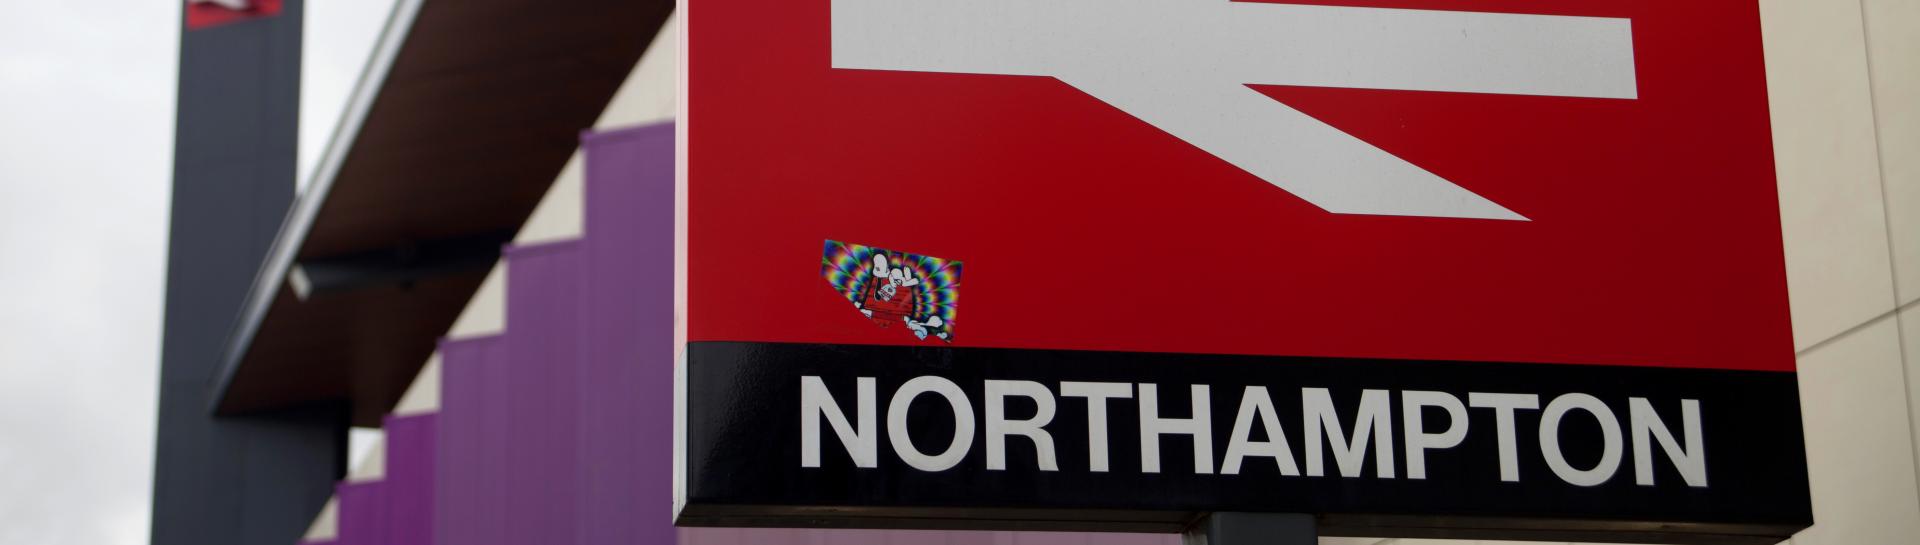 Northampton train station sign